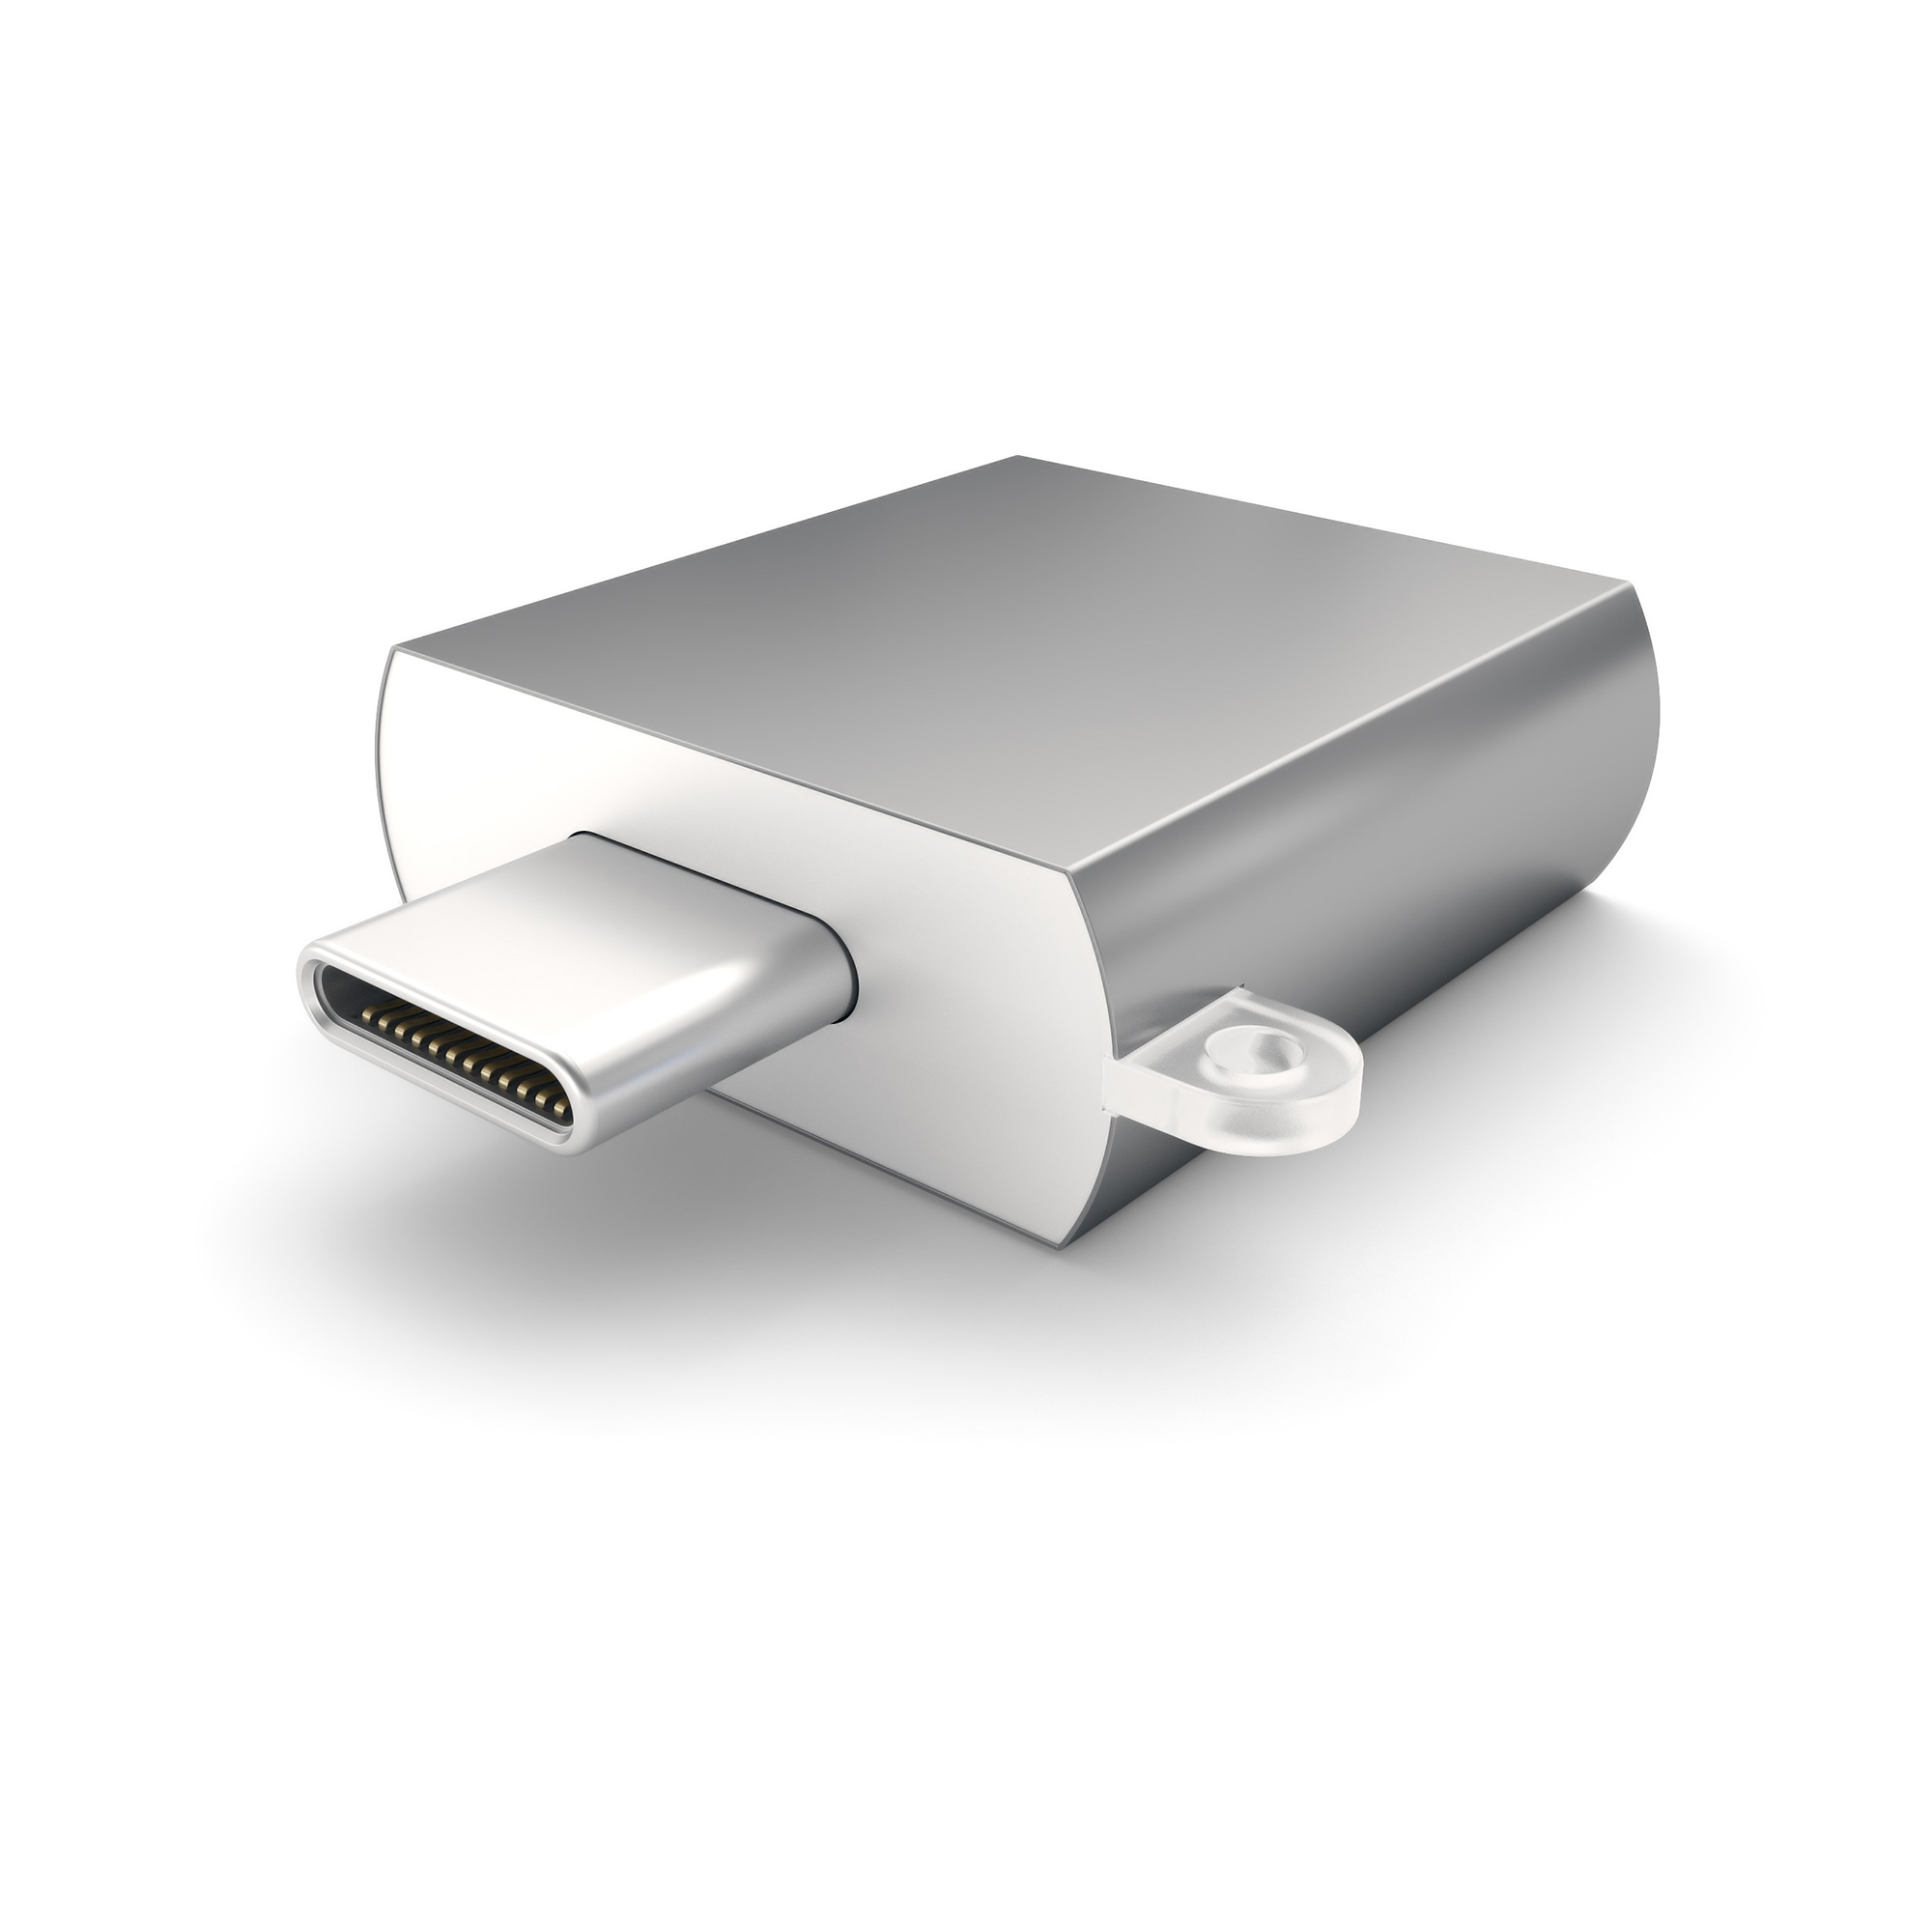 Адаптер Satechi USB 3.0 Type-C to USB 3.0 Type-A Space Gray ST-TCUAM hub 5 в 1 remax ru u5 для macbook type c док станция хаб macbook usb хаб переходник адаптер зарядка usb c hdmi концентратор